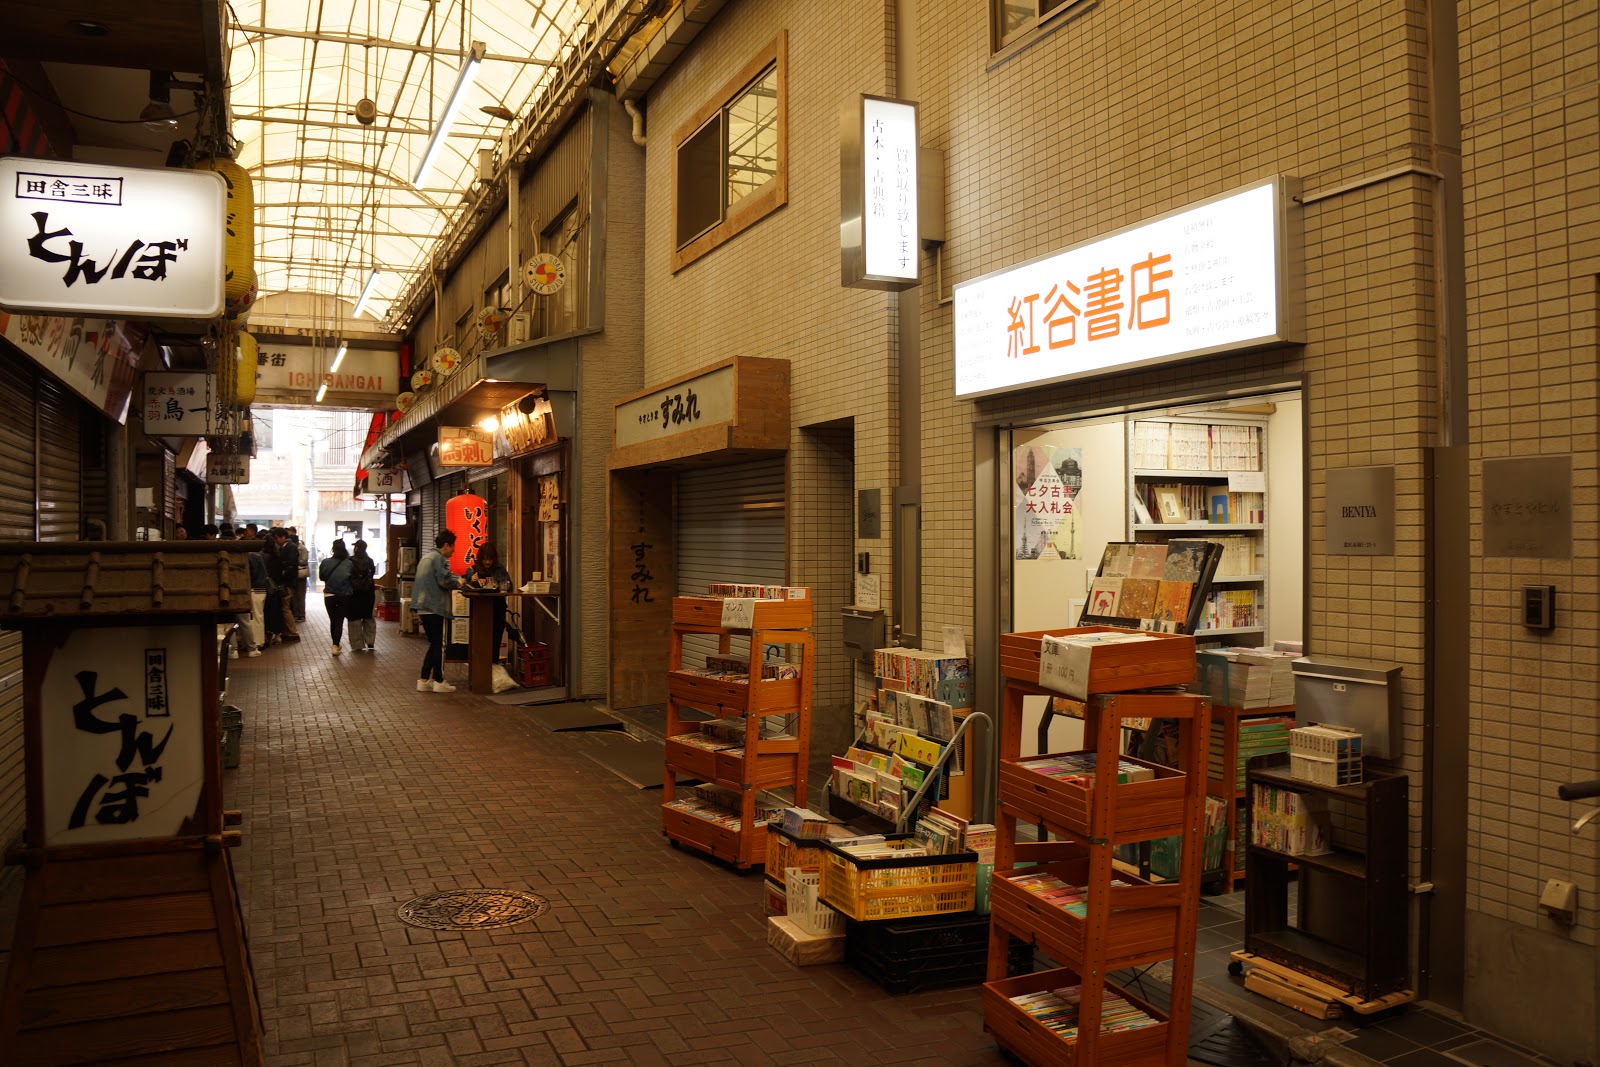 Tokyo Explorer S Map 一番街シルクロード 赤羽商店街のアーケード下の昼のみ センベロ飲み屋街